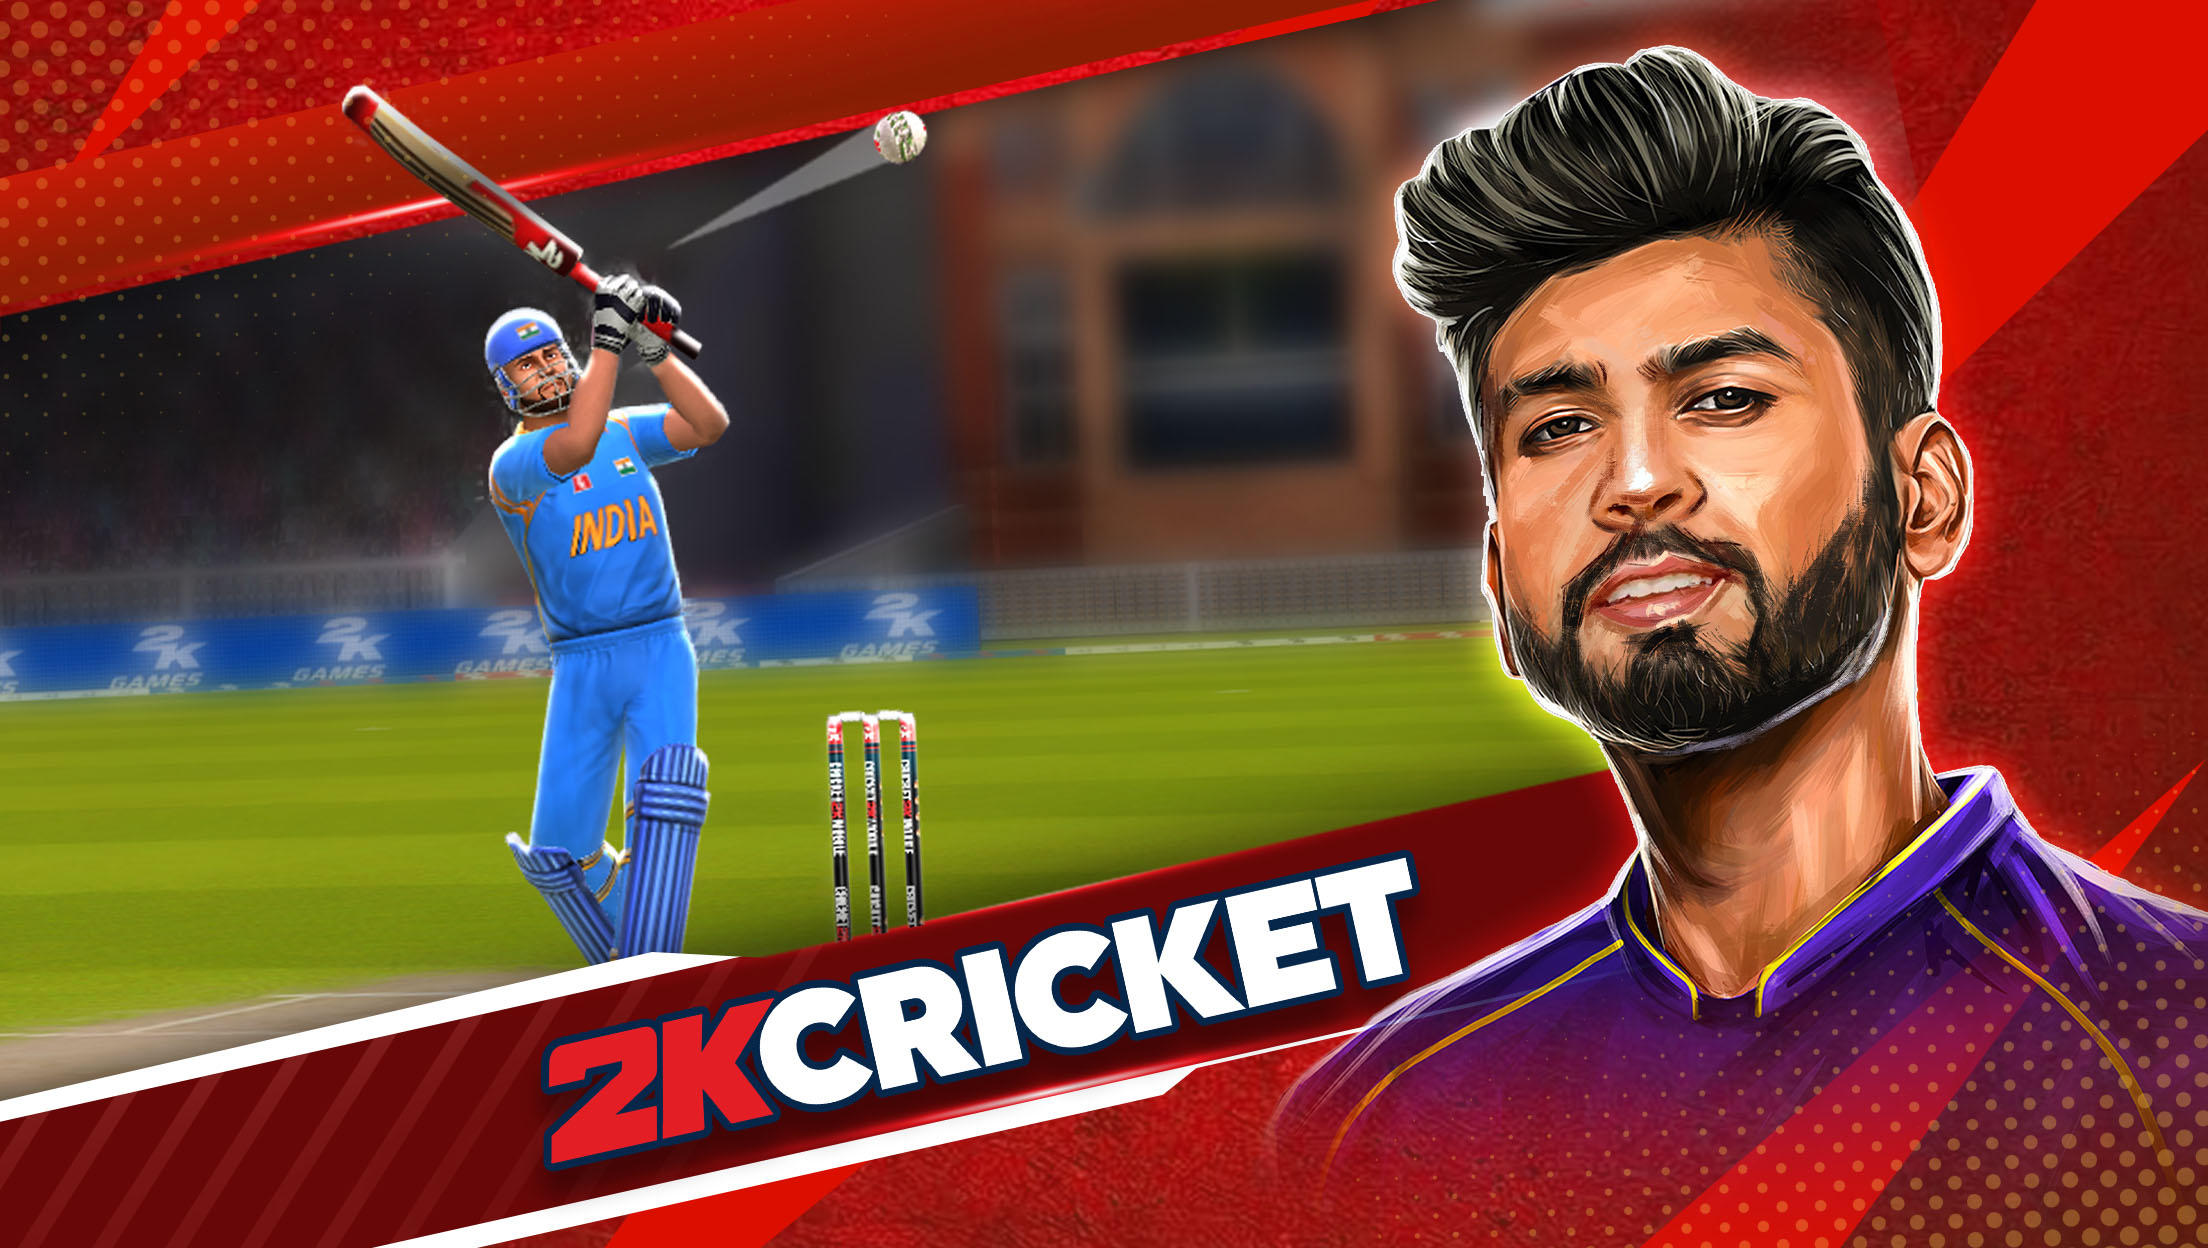 Screenshot of 2K Cricket